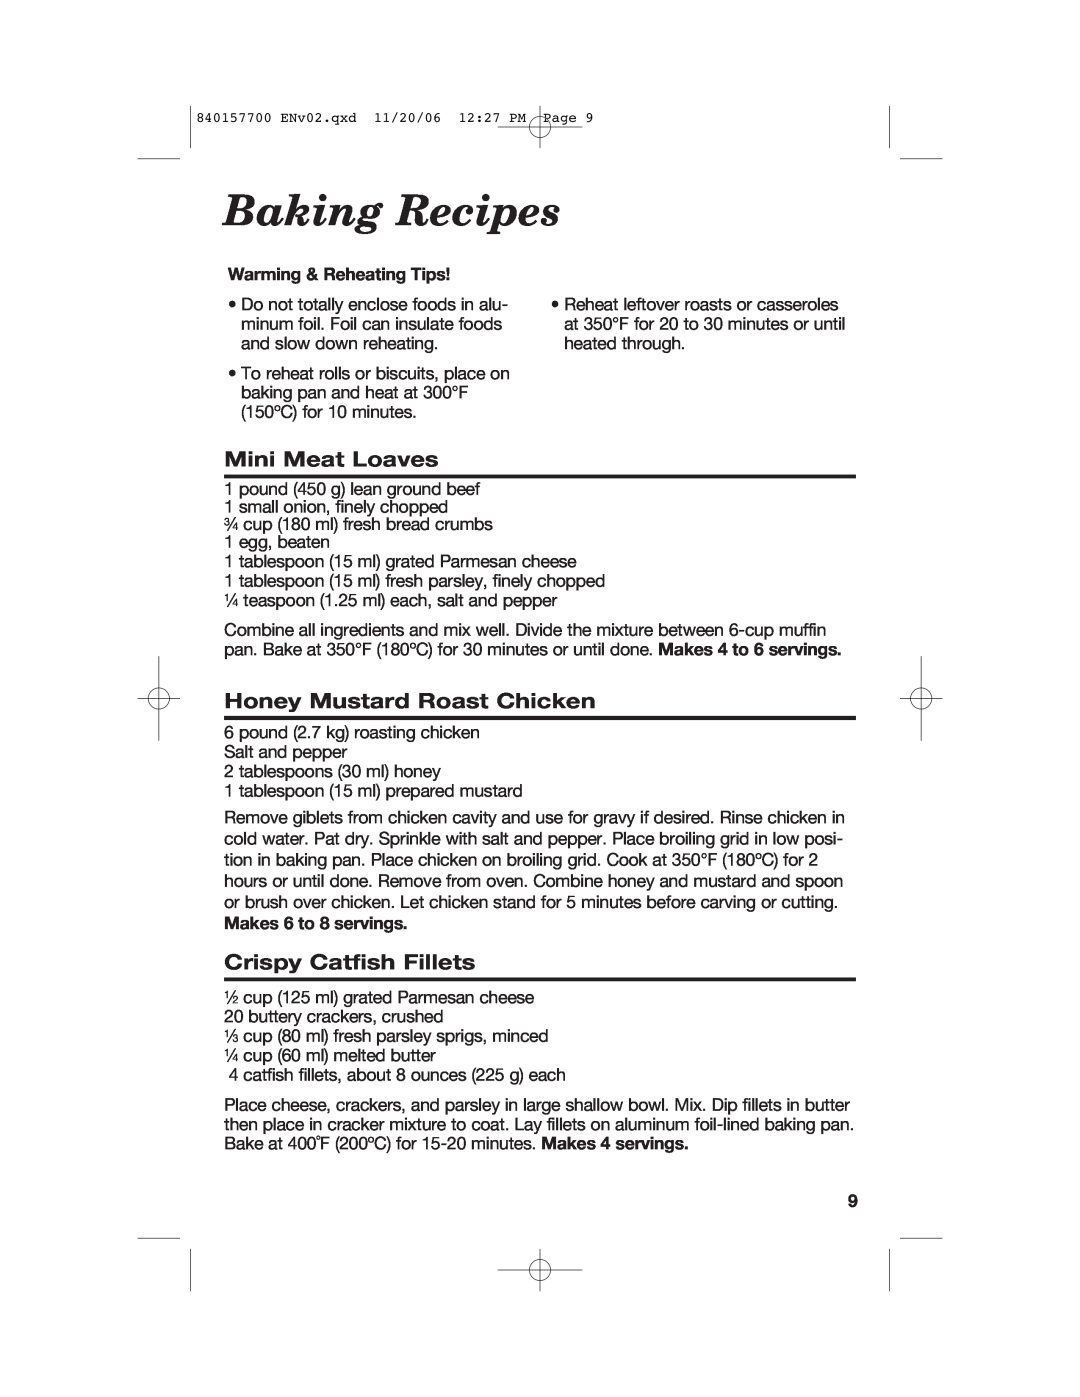 Hamilton Beach 31150C manual Baking Recipes, Mini Meat Loaves, Honey Mustard Roast Chicken, Crispy Catfish Fillets 